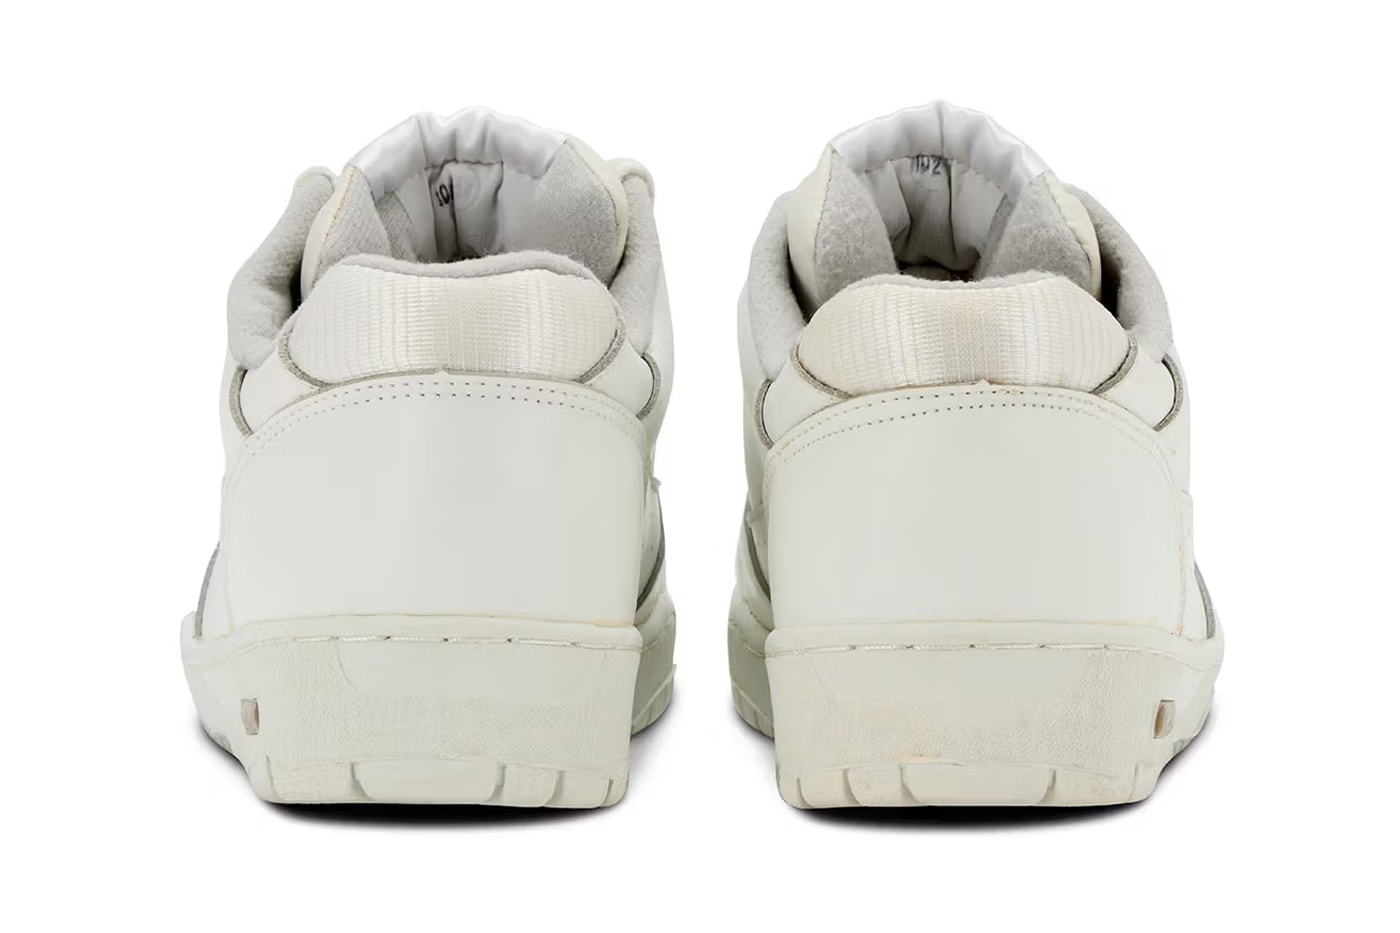 Sotheby's 正在以 $5 萬美元價格拍賣罕見的 Apple 員工限定球鞋